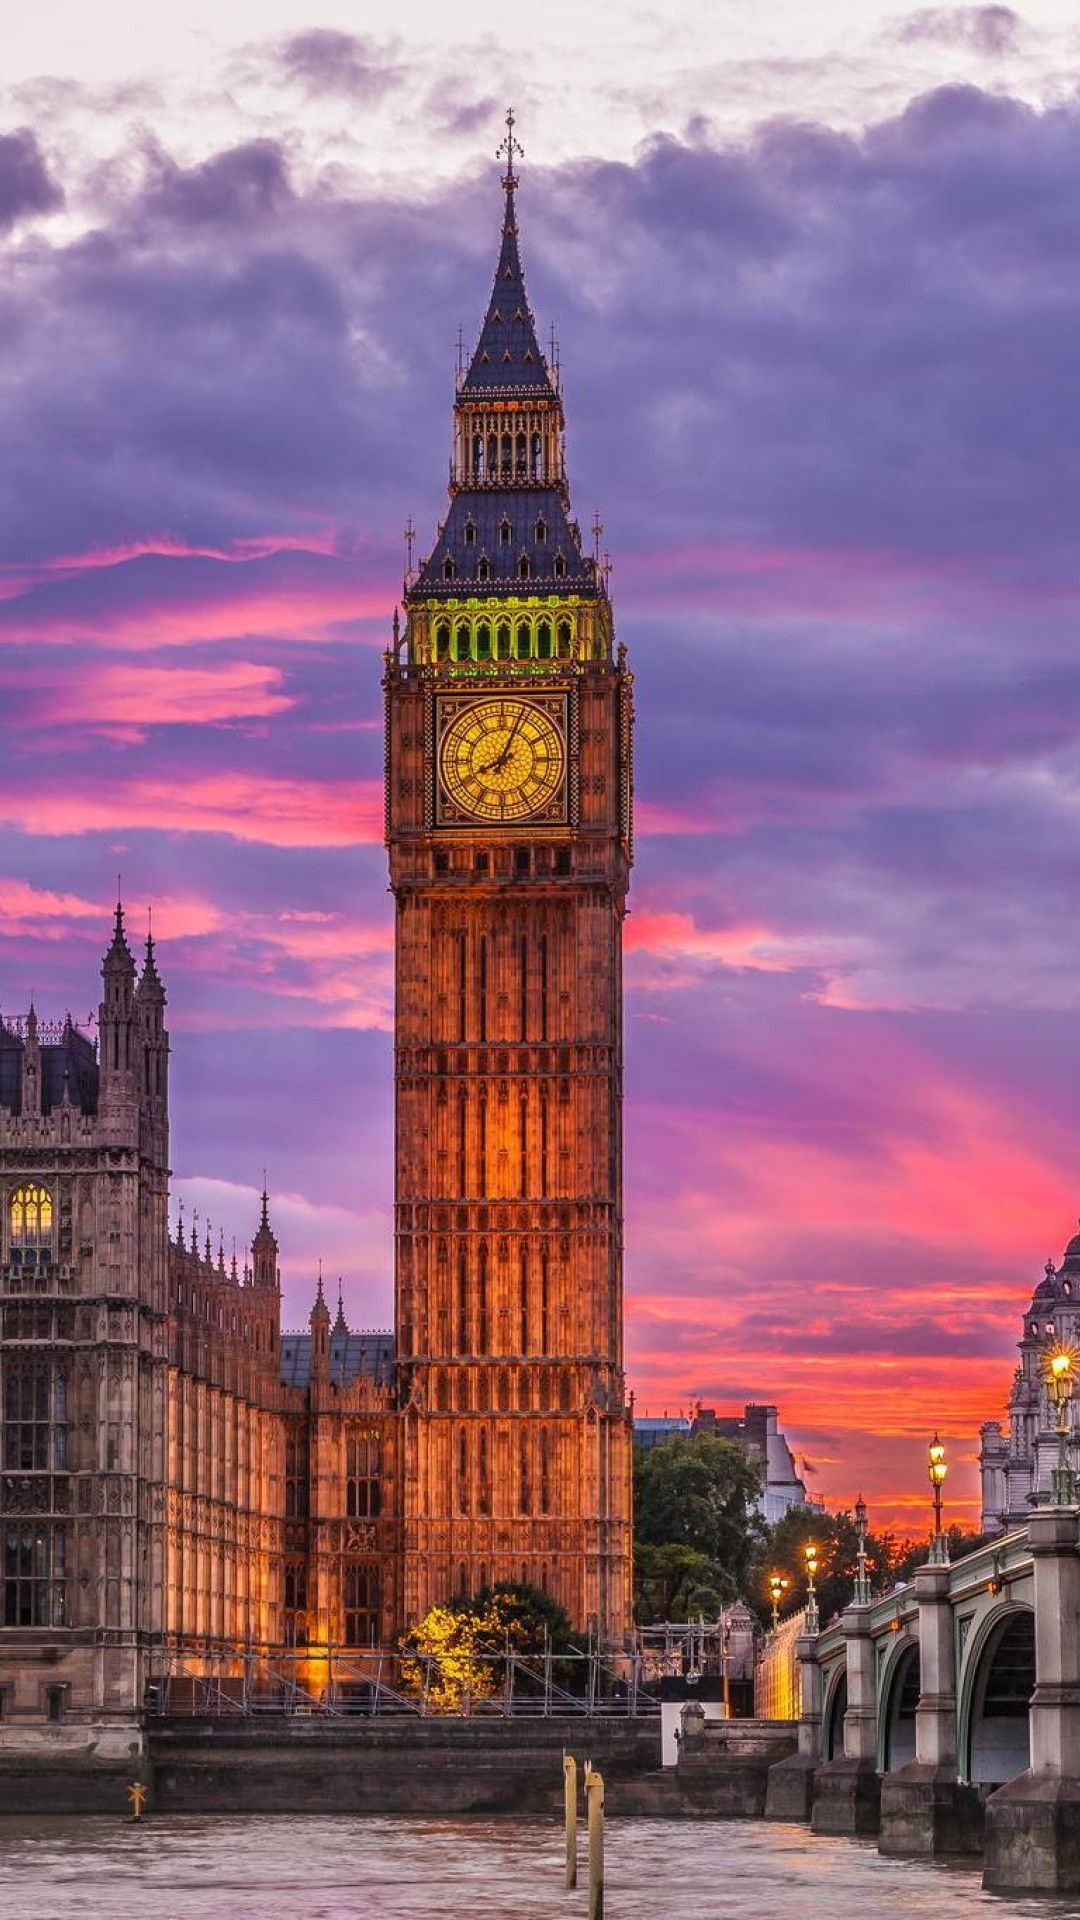 1080x1920 London England iPhone Wallpapers Top Free London England iPhone Backgrounds | London wallpaper, London england, Big ben lond